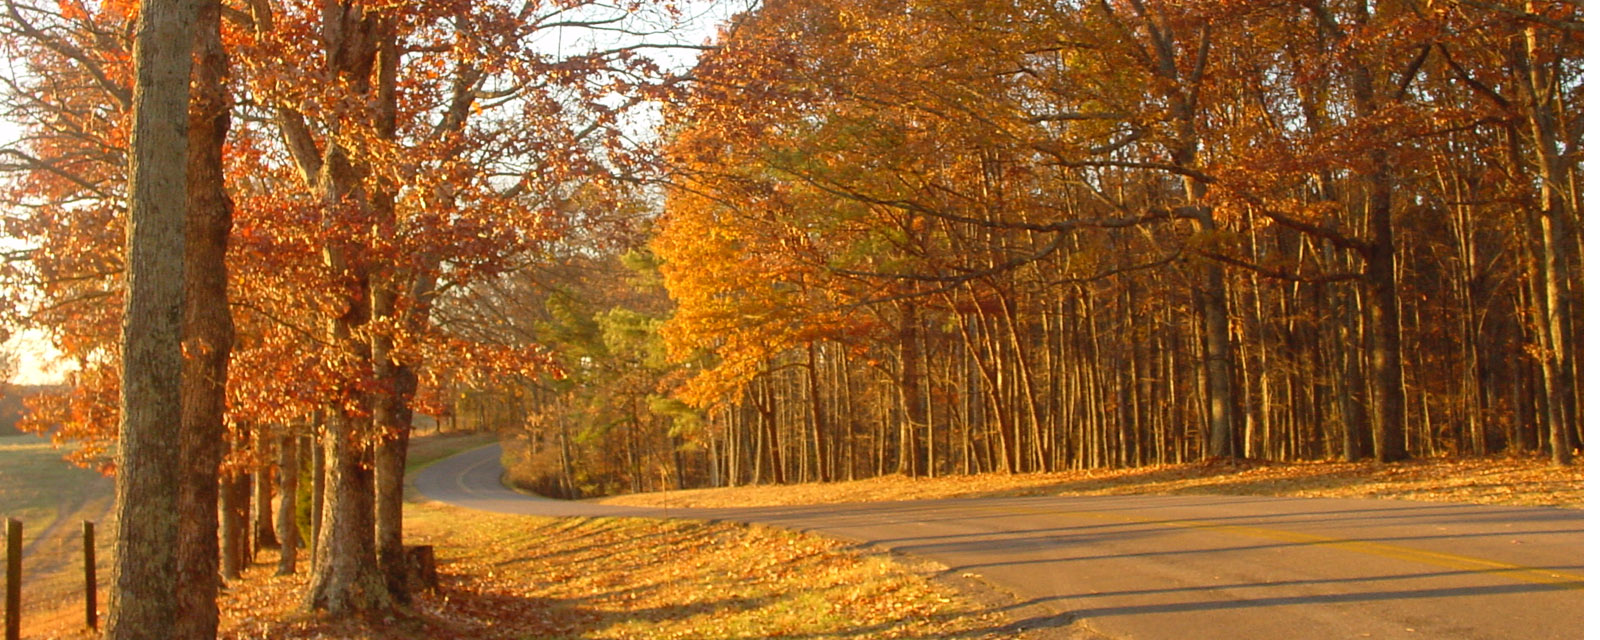 https://commons.wikimedia.org/wiki/File:Roadway_in_David_Crockett_State_Park_(Autumn_2008_-_Horizontal_Image).jpg